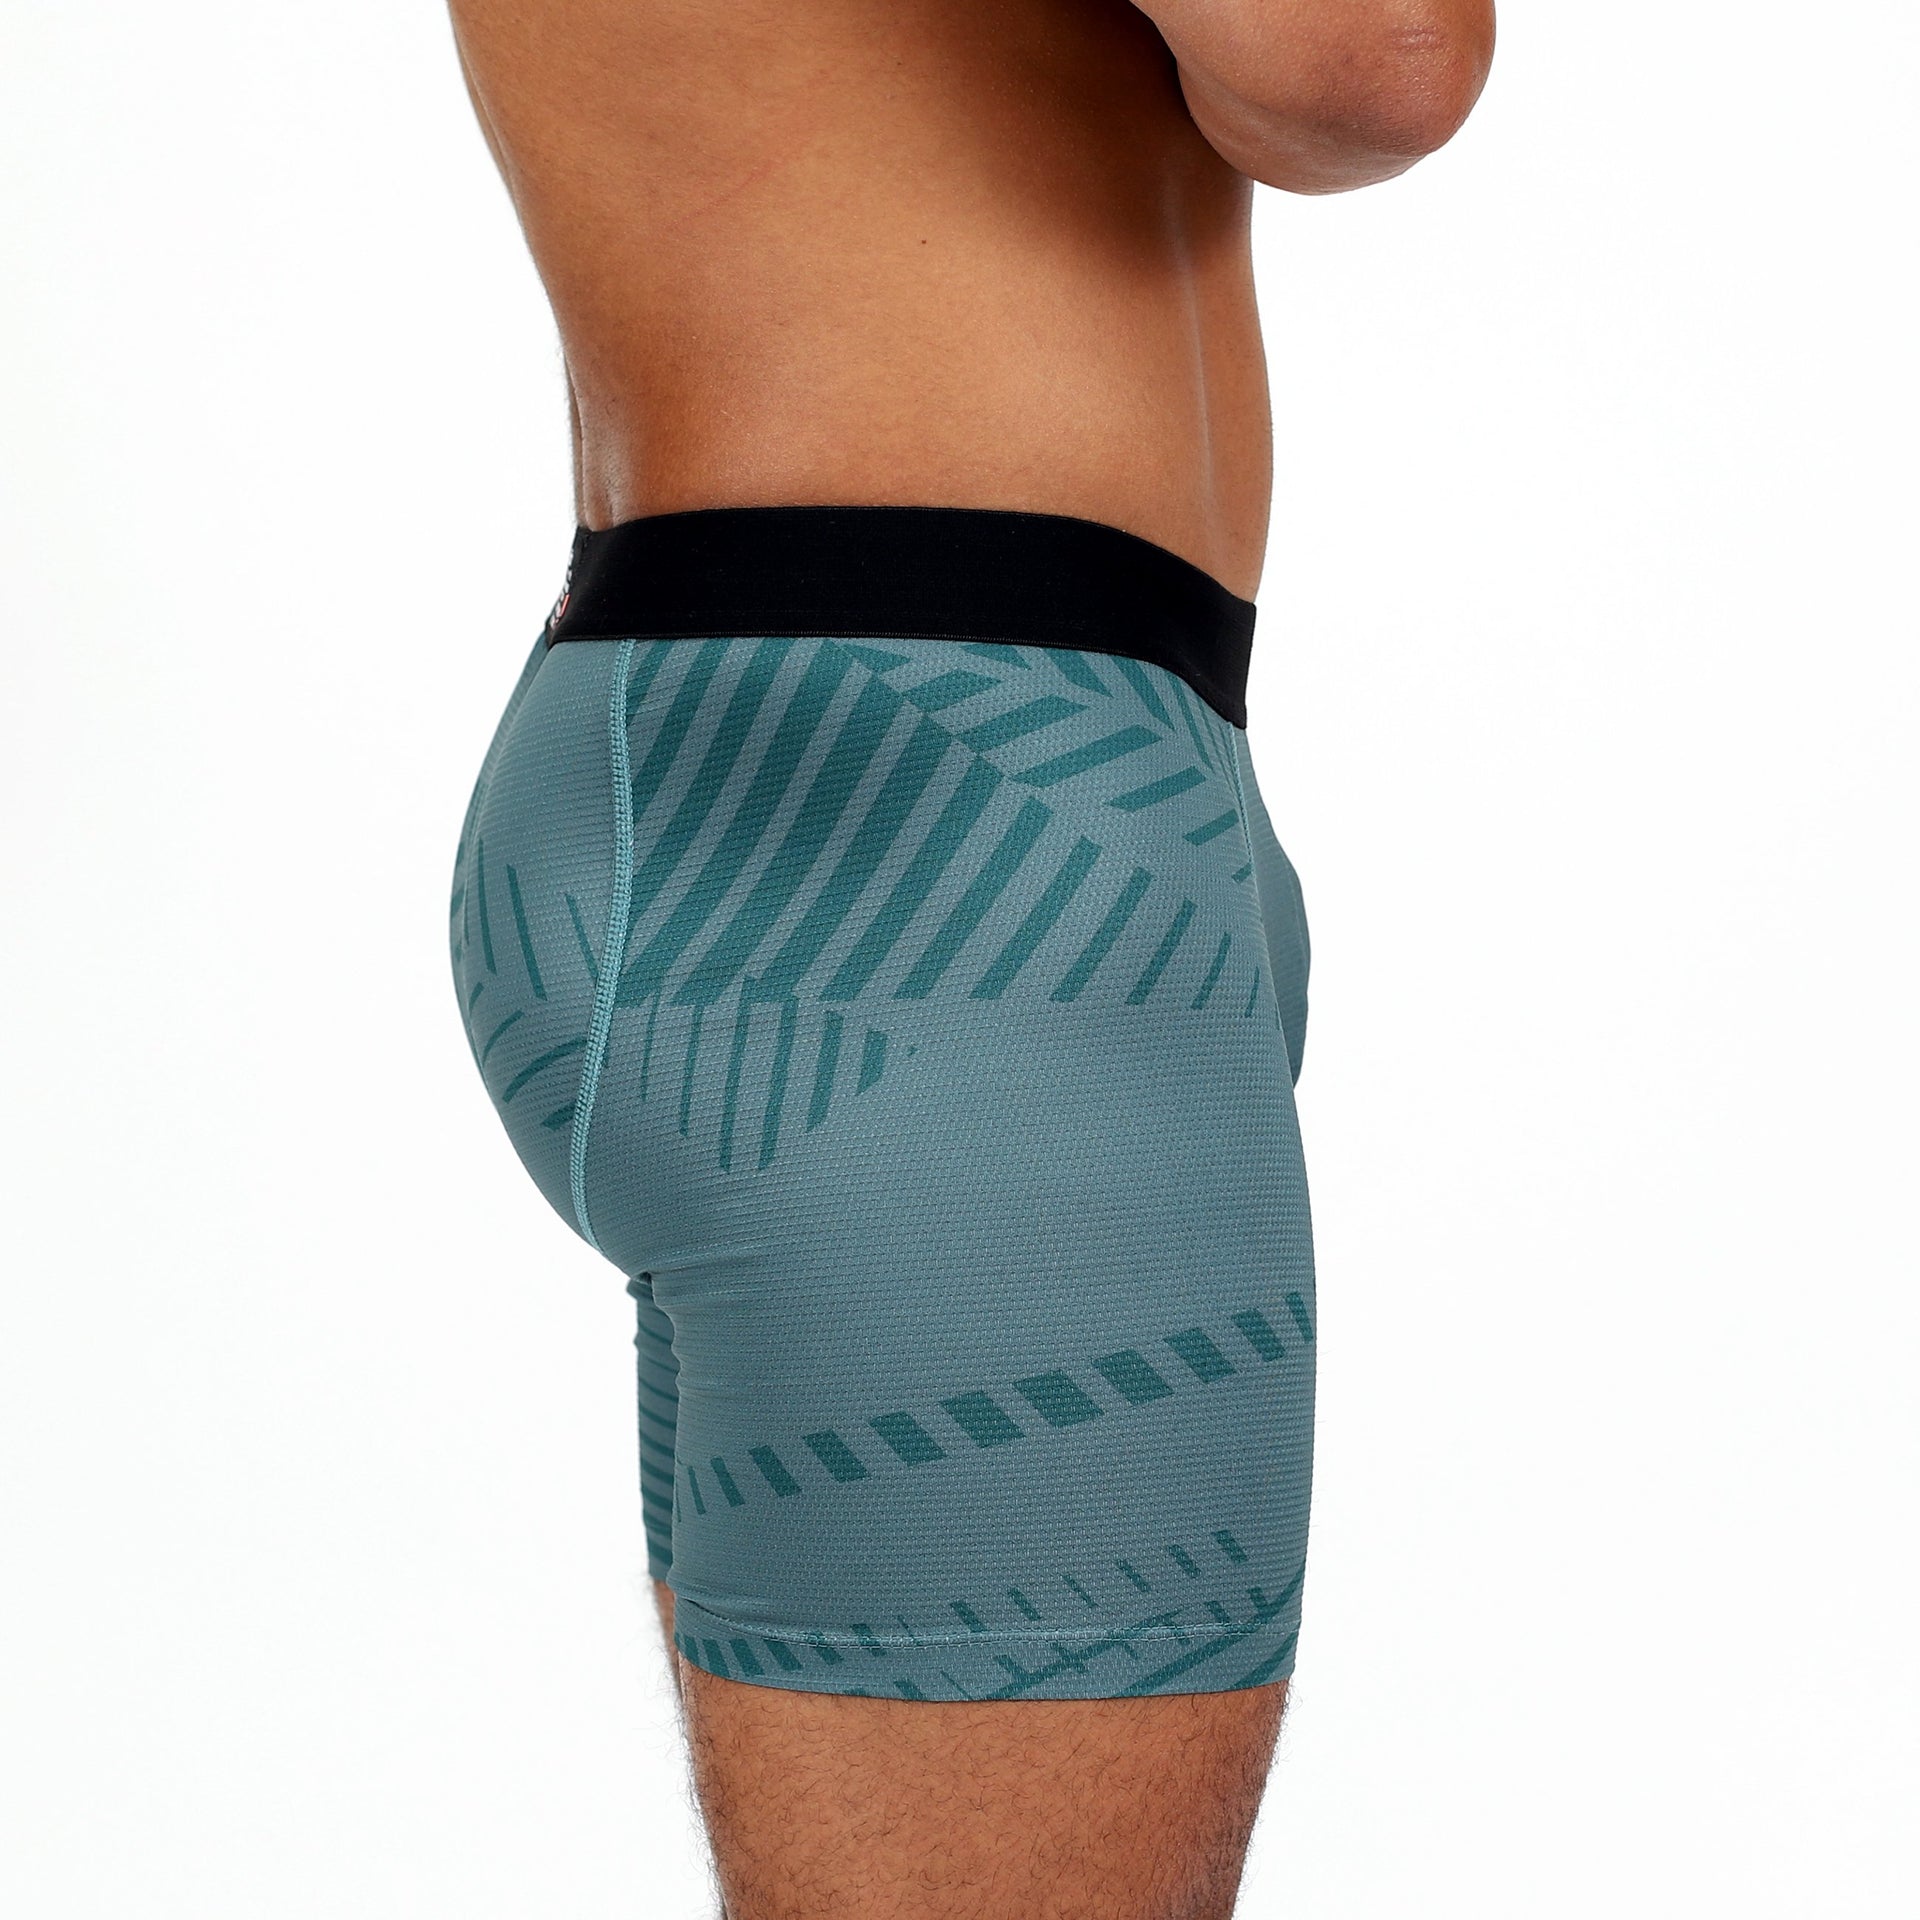 Special Edition V2 Grappling Underwear 2-PACK - ShopperBoard